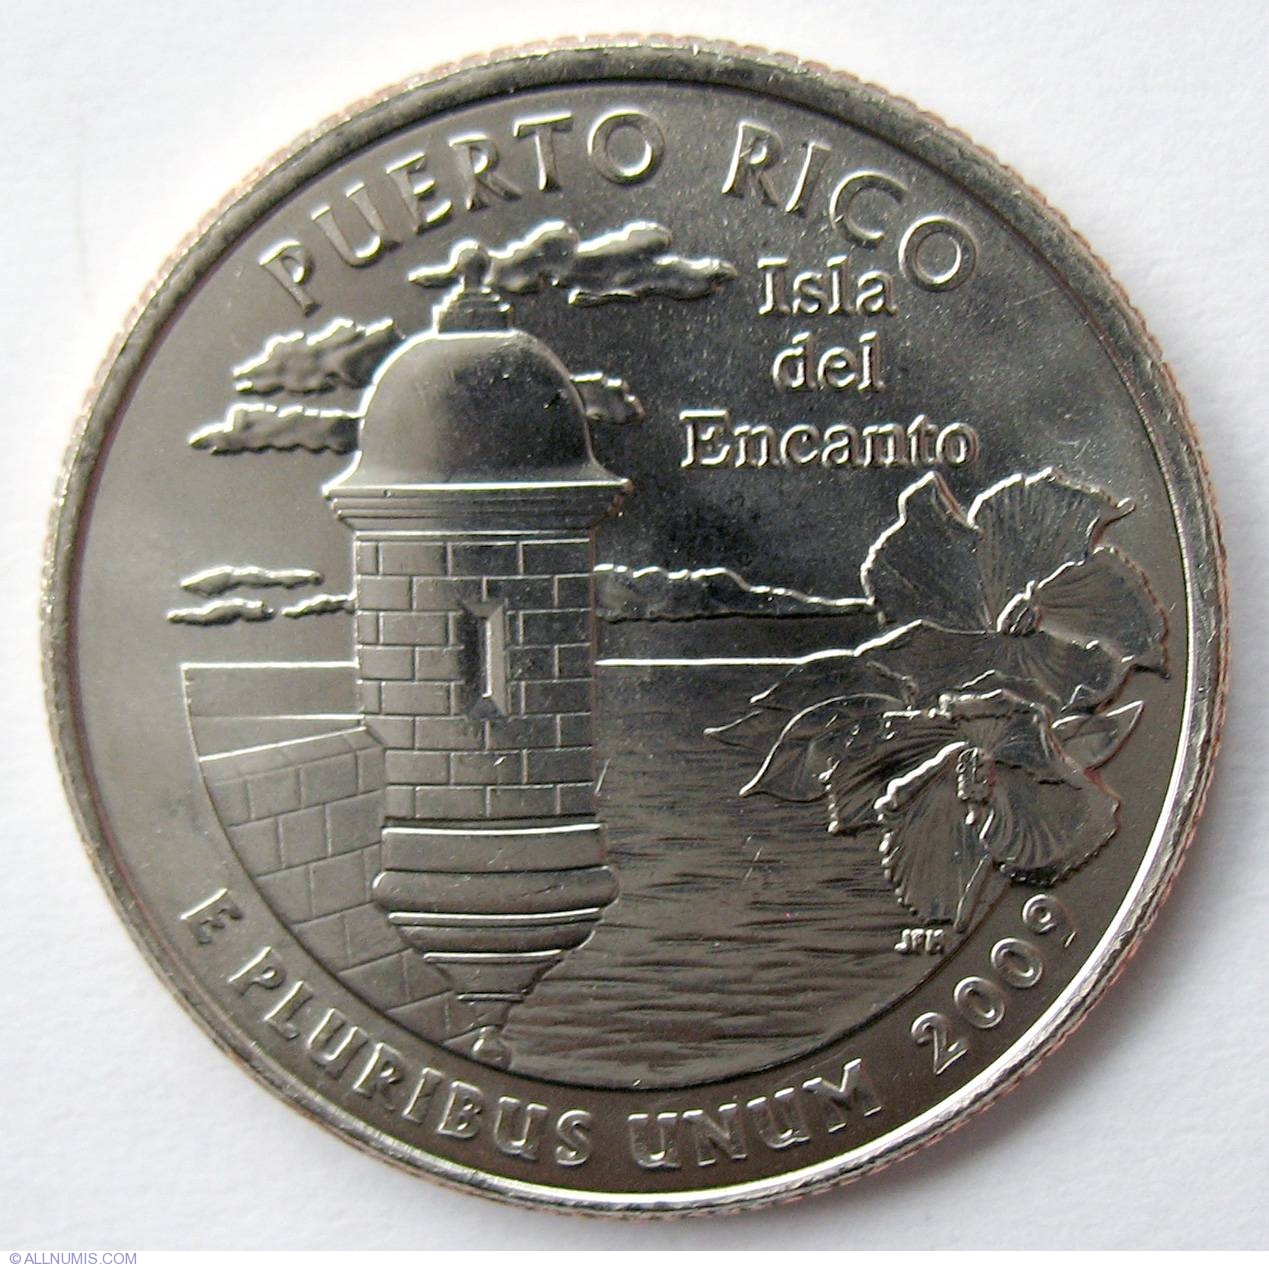 2009-D  BU Mint State US Territory Quarter PUERTO RICO 